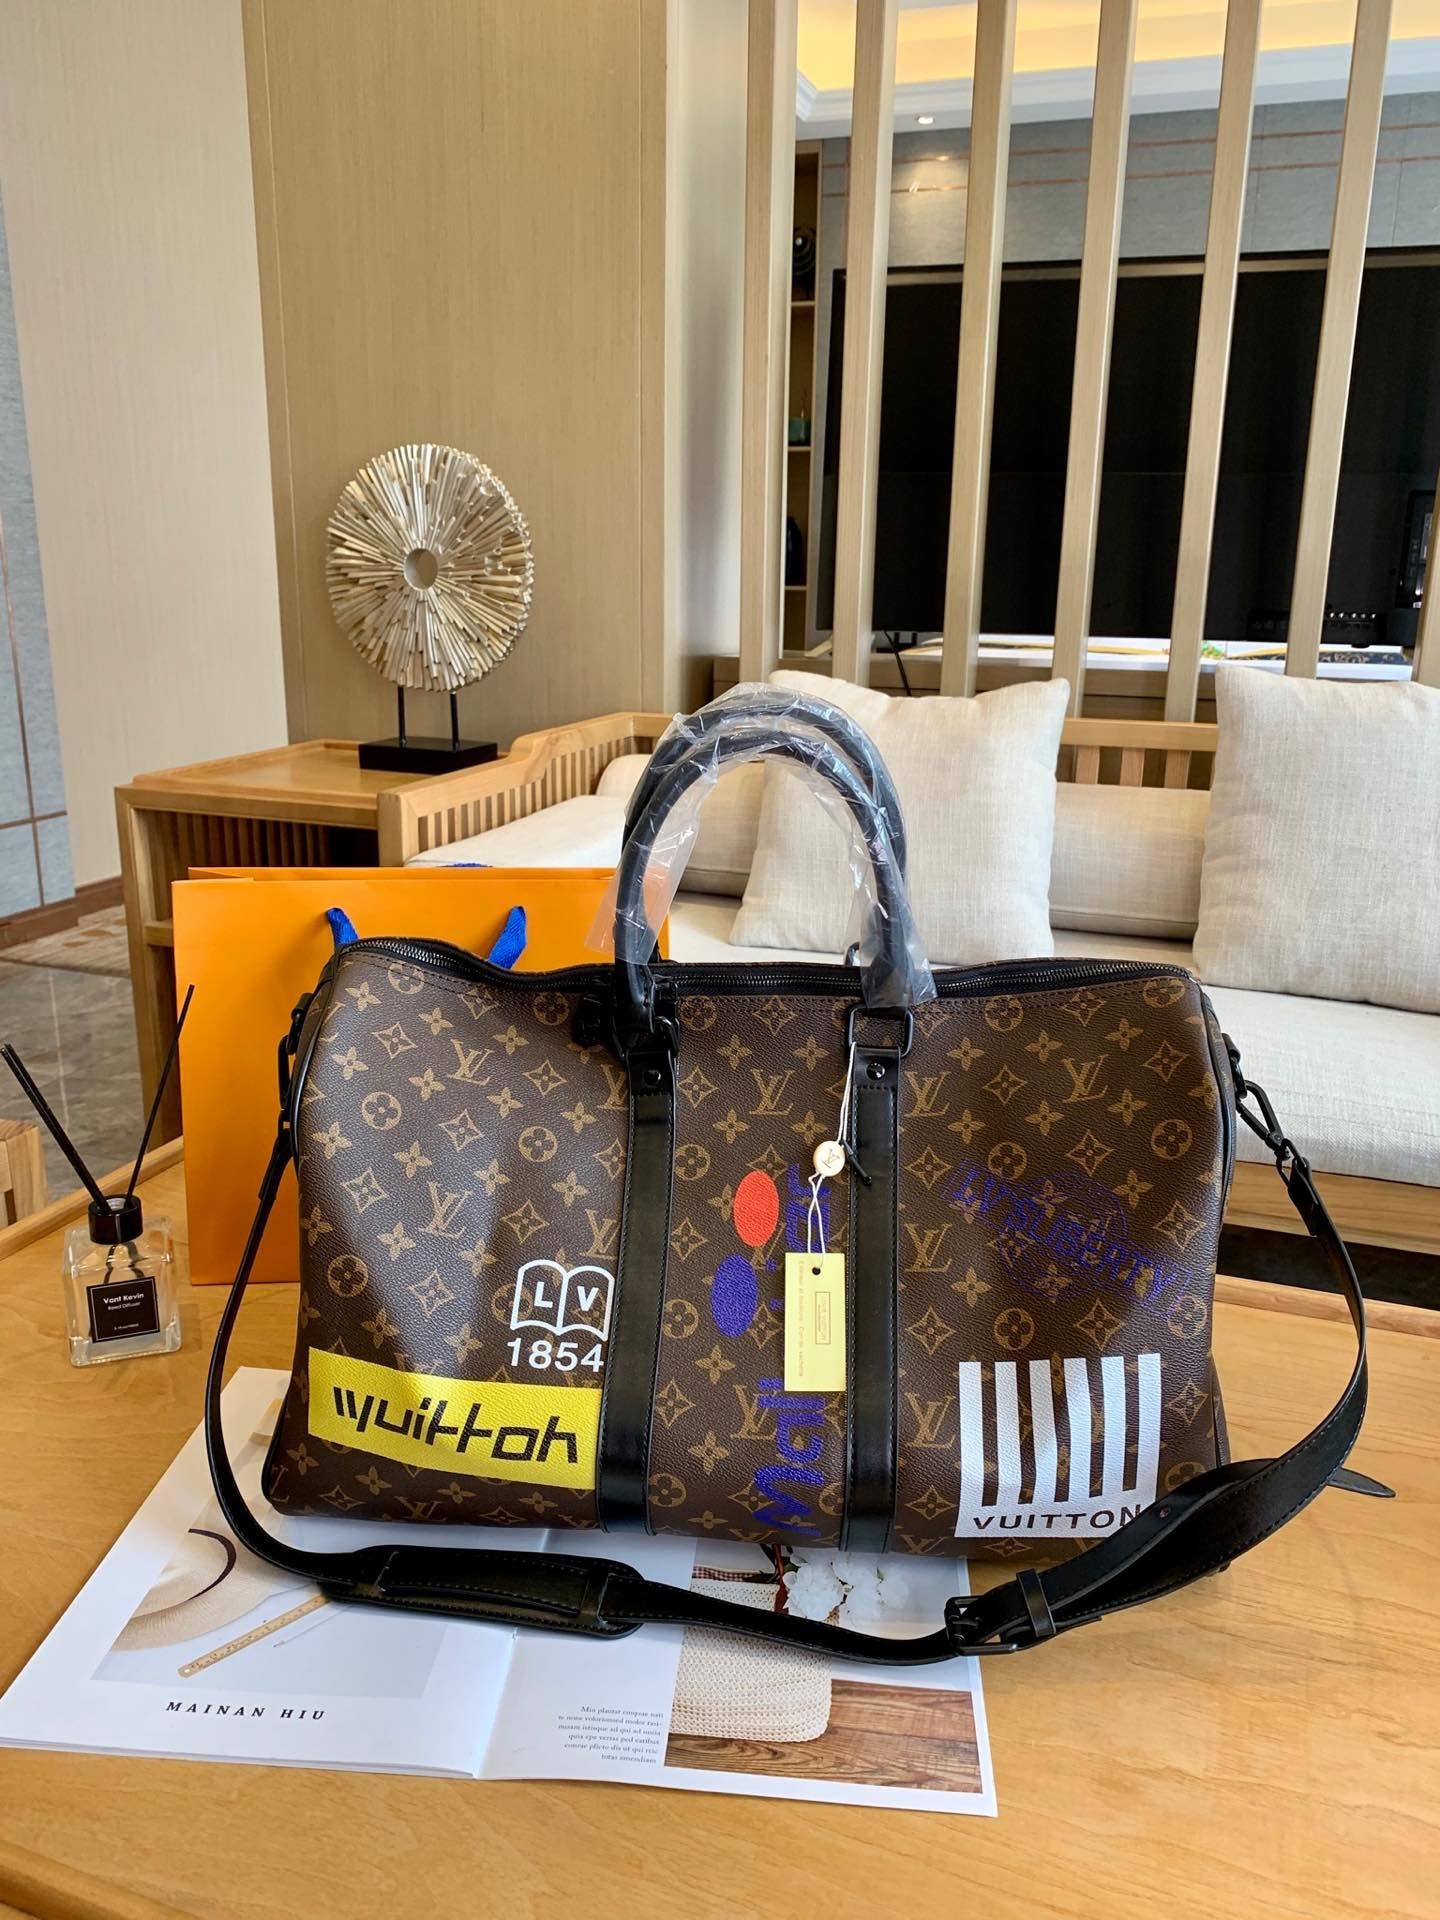 2020 2019 Hot Sale Fashion Vintage Handbags Luxurys Bag Women Bags Designers Handbags Leather ...